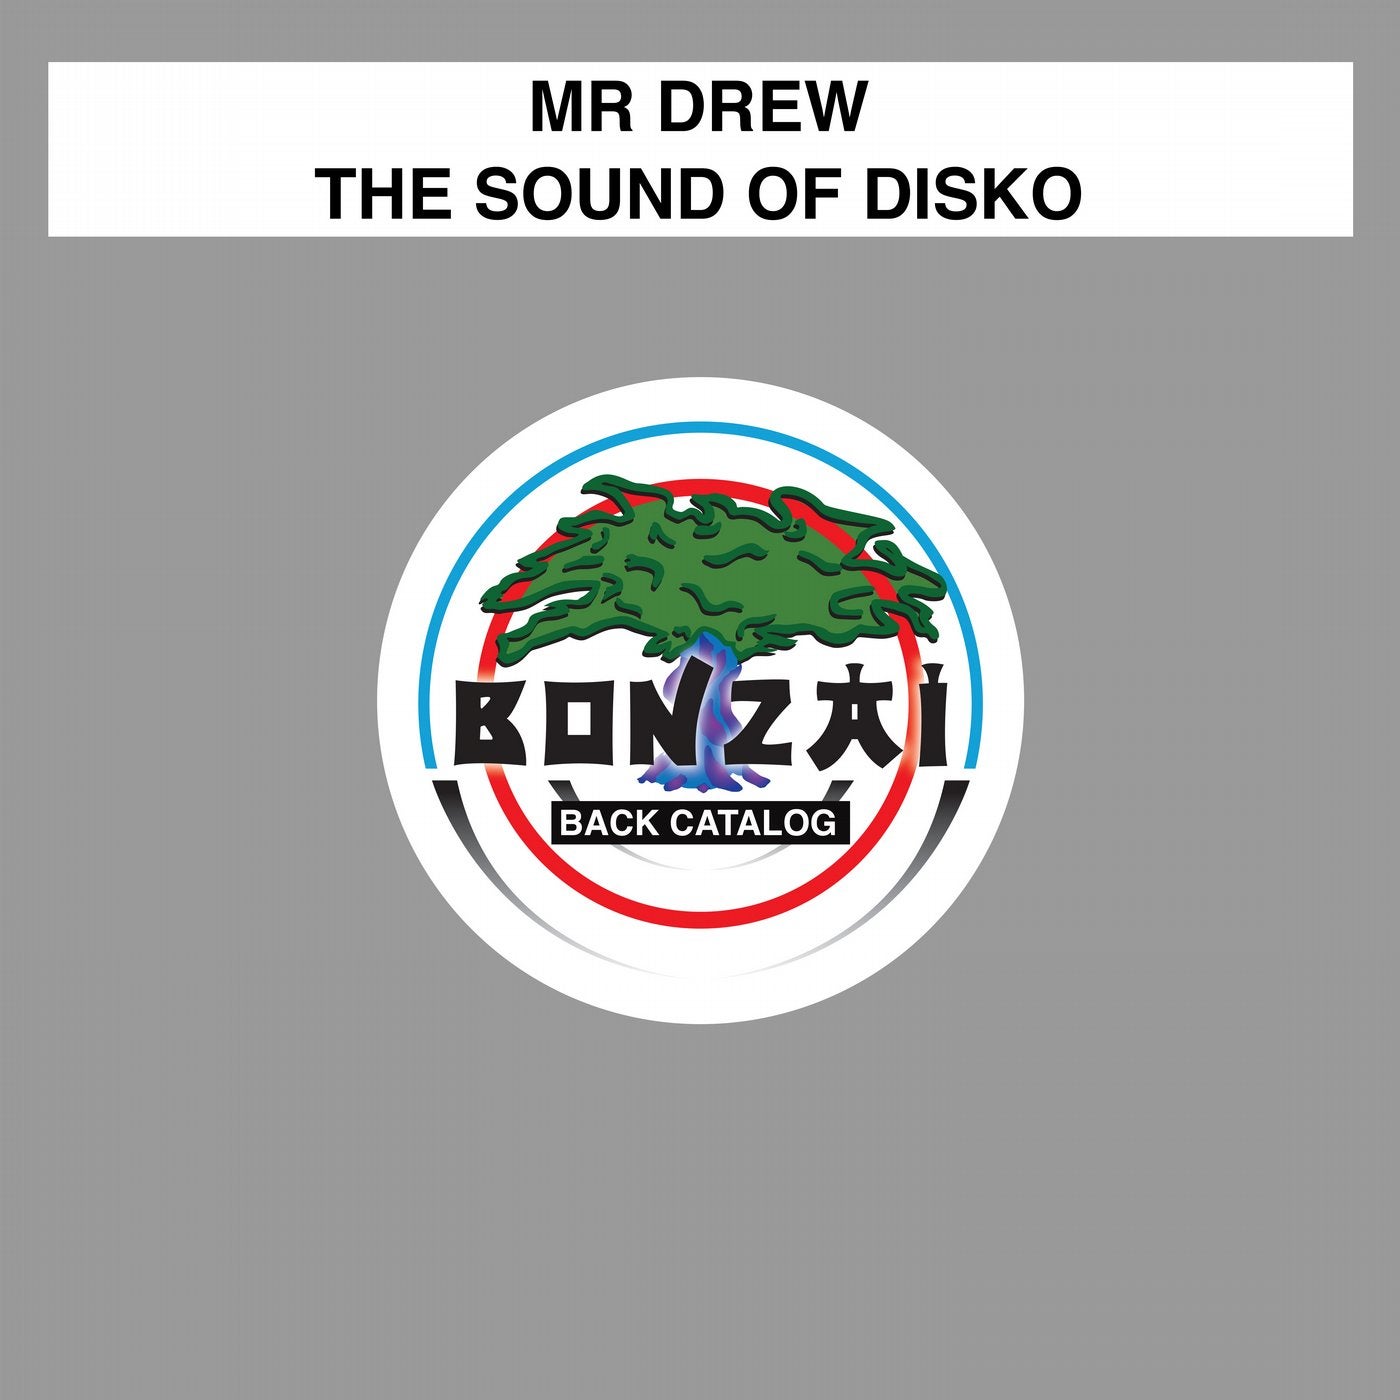 The Sound Of Disko